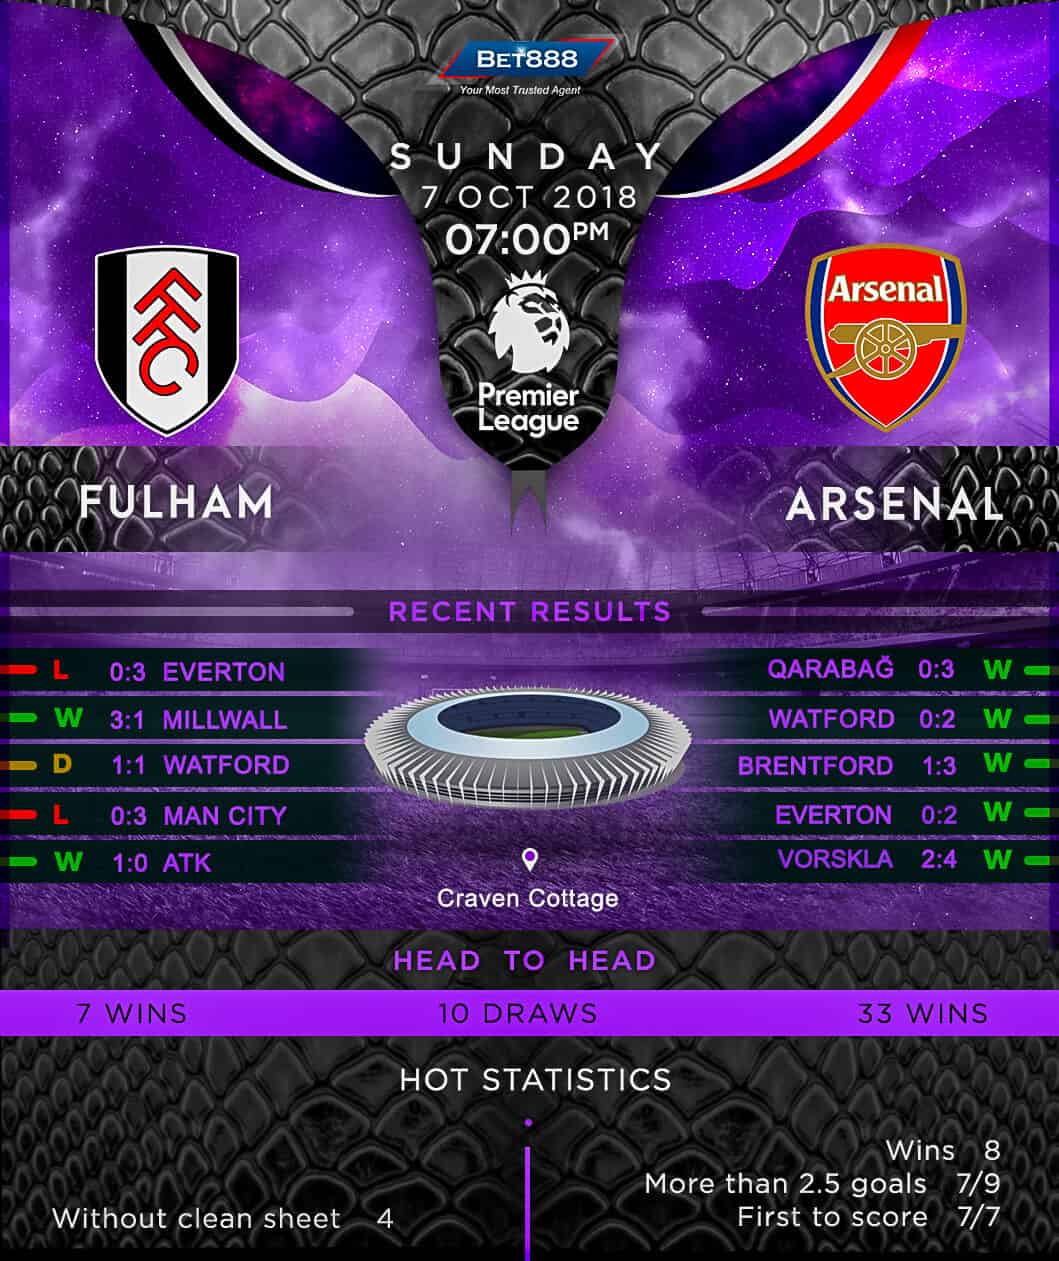 Fulham vs Arsenal 07/10/18